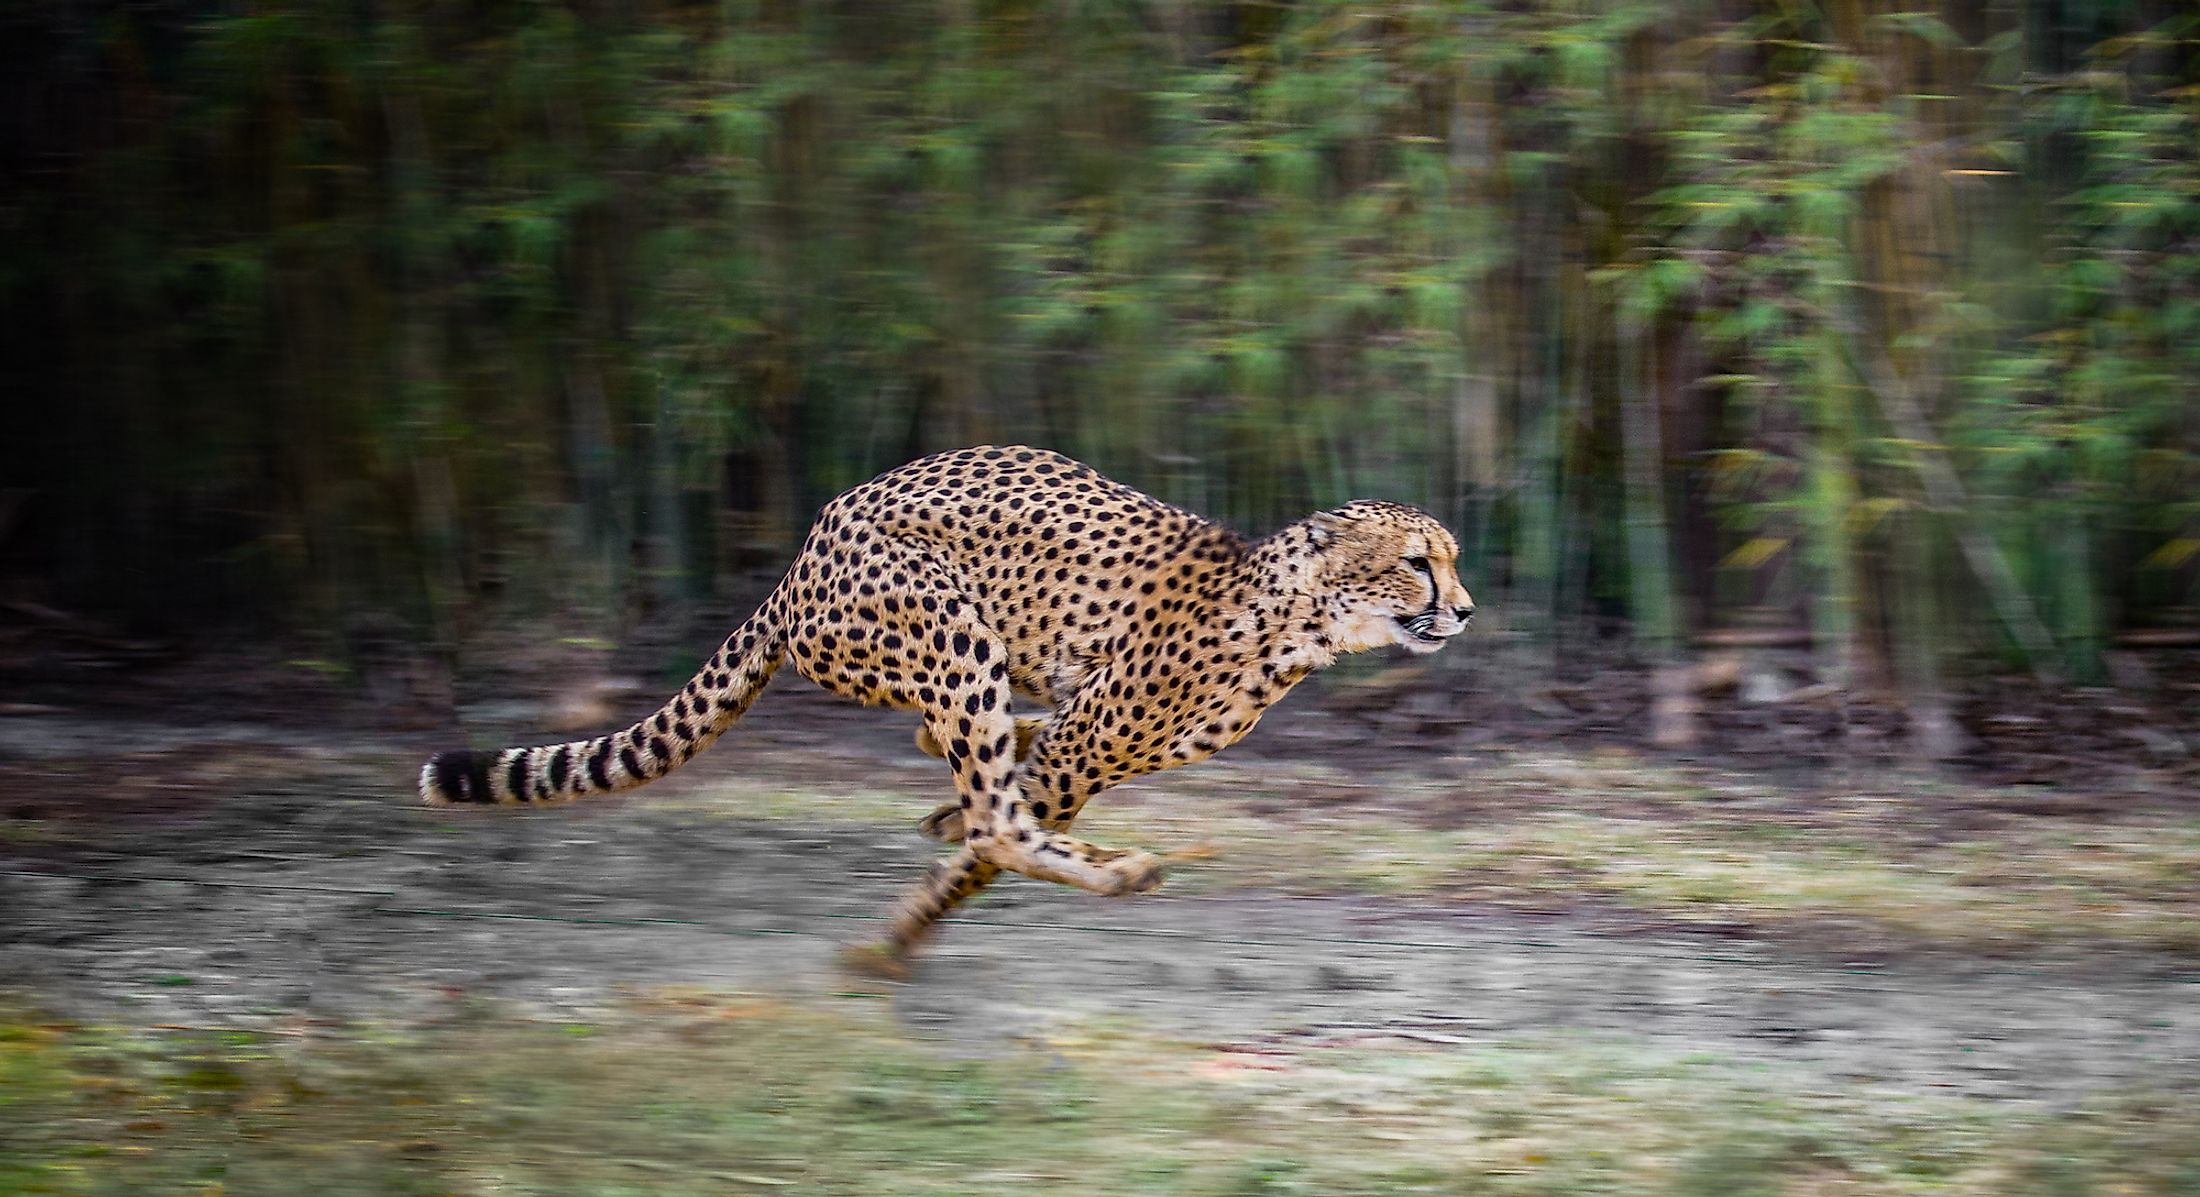 Can A Human Outrun A Cheetah? - WorldAtlas